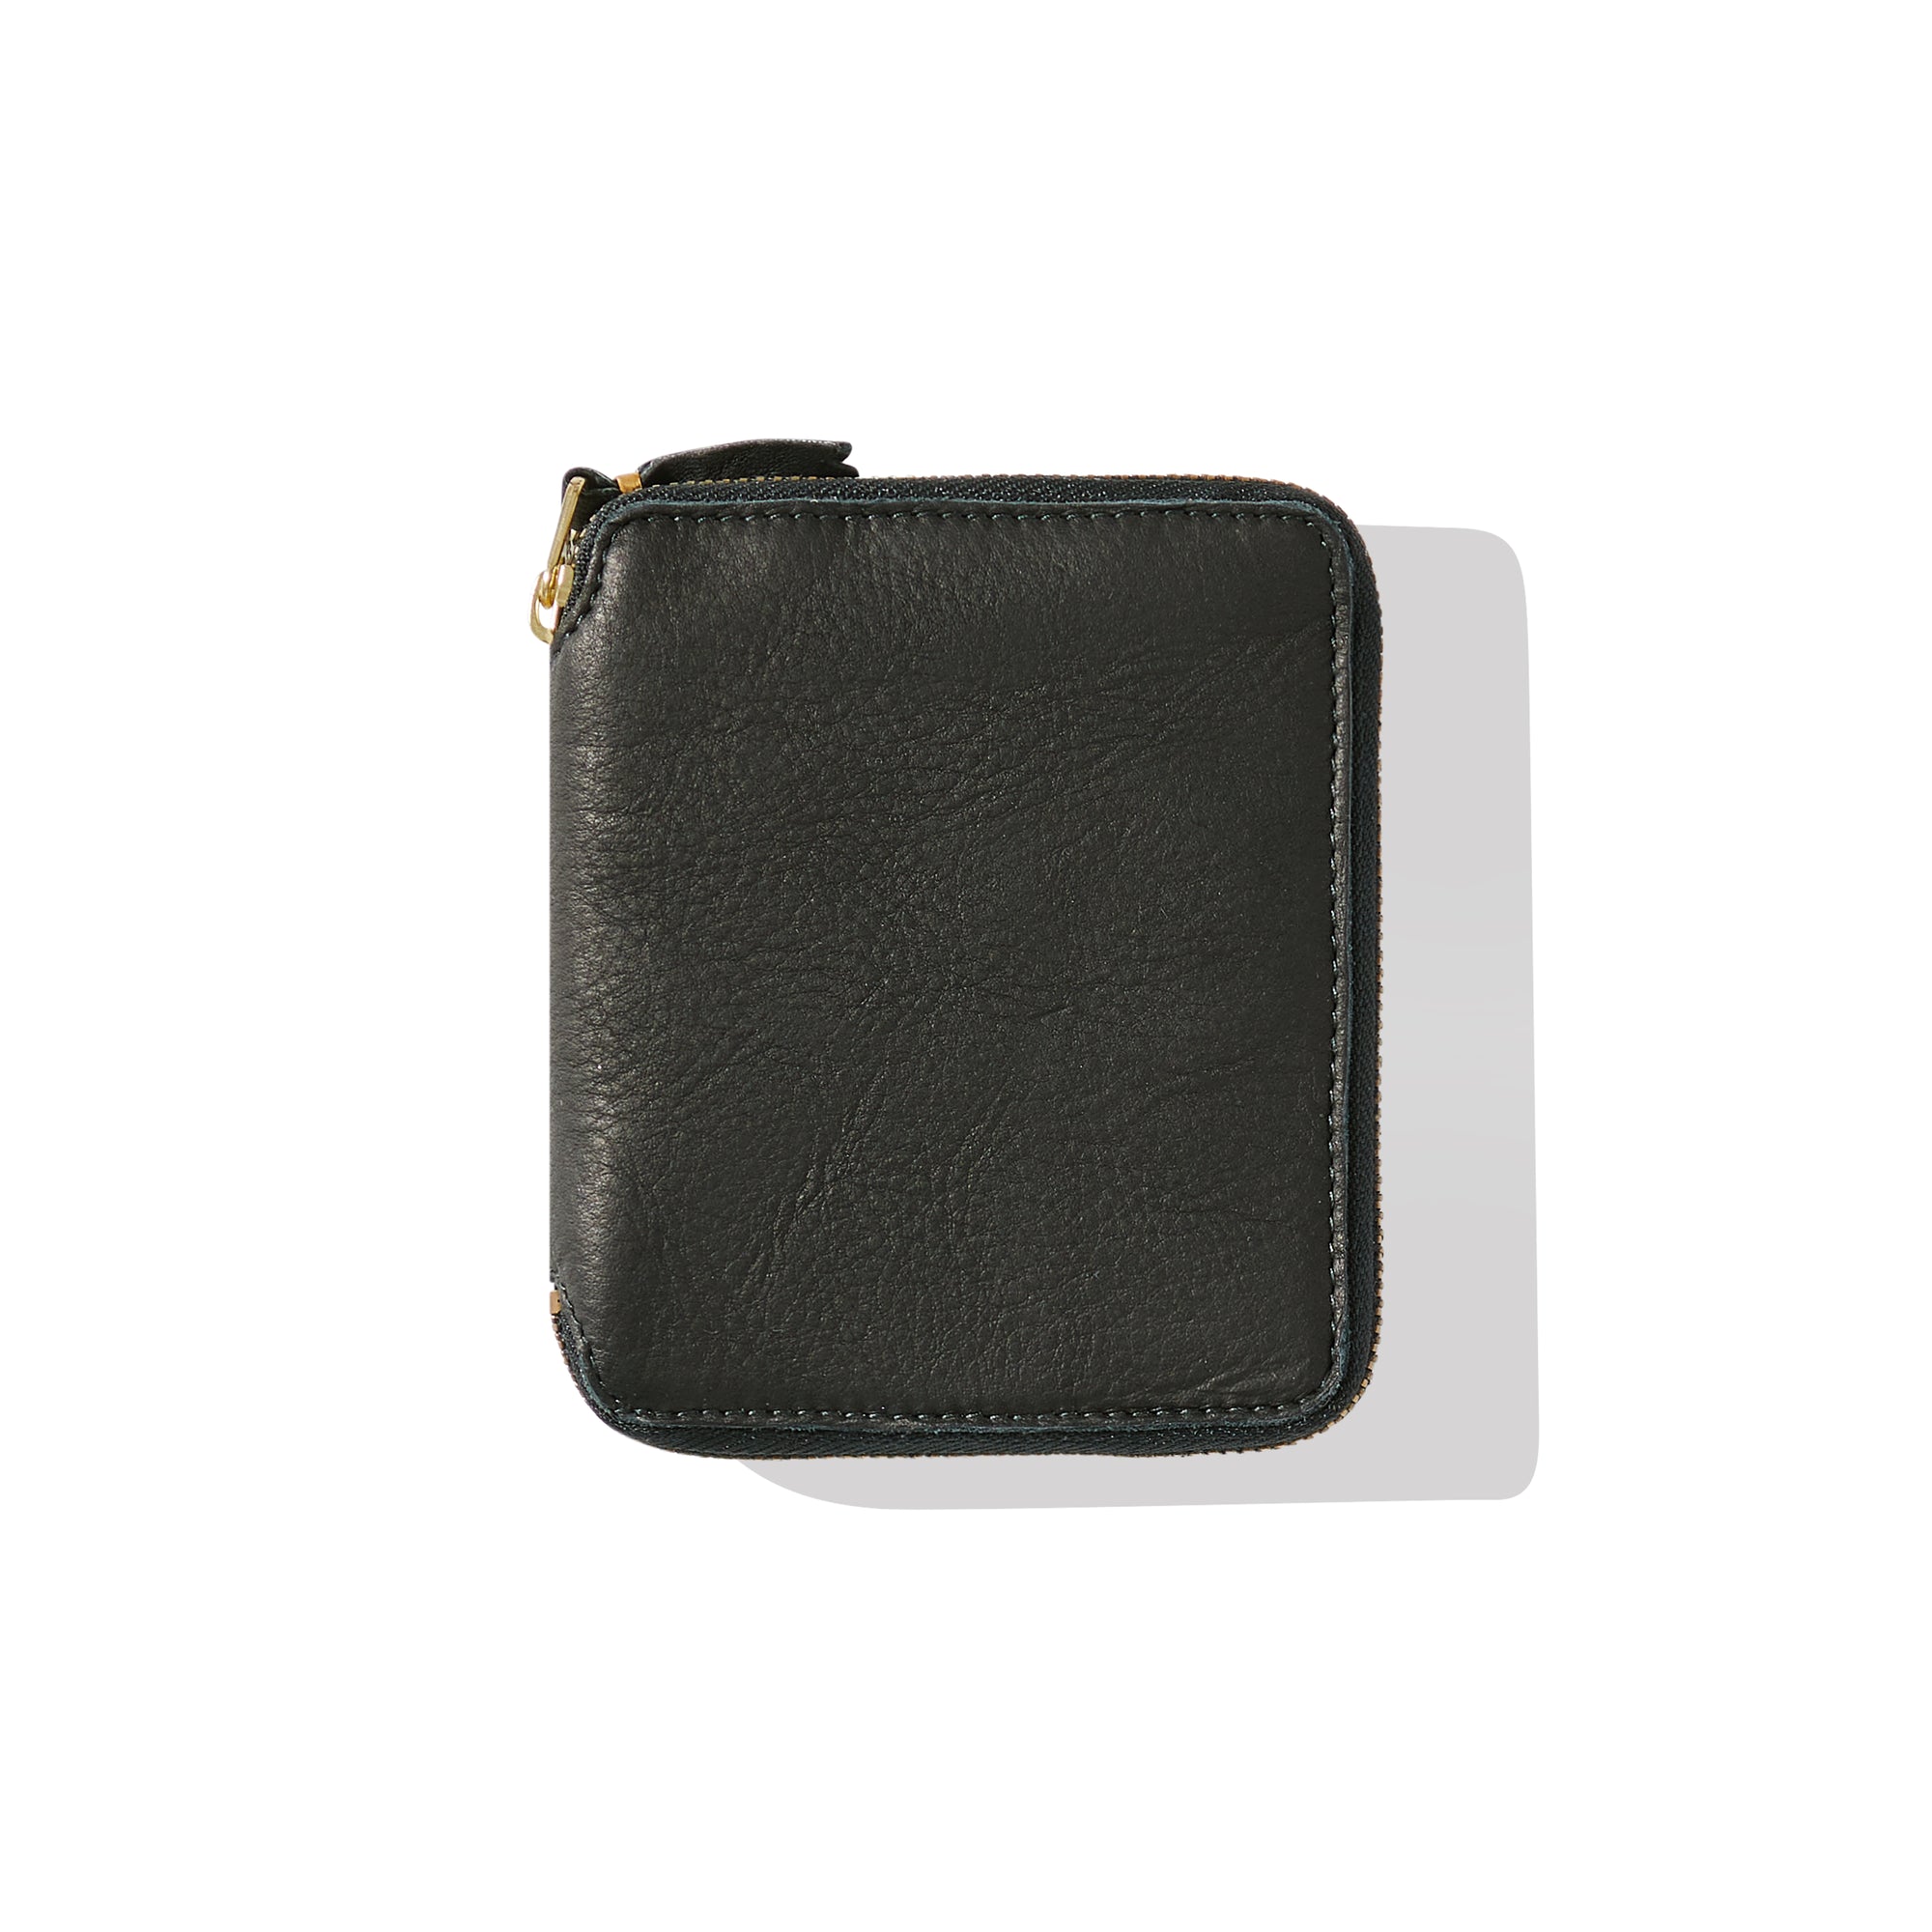 CDG Wallet - Washed Full Zip Around Wallet - (Black) view 1